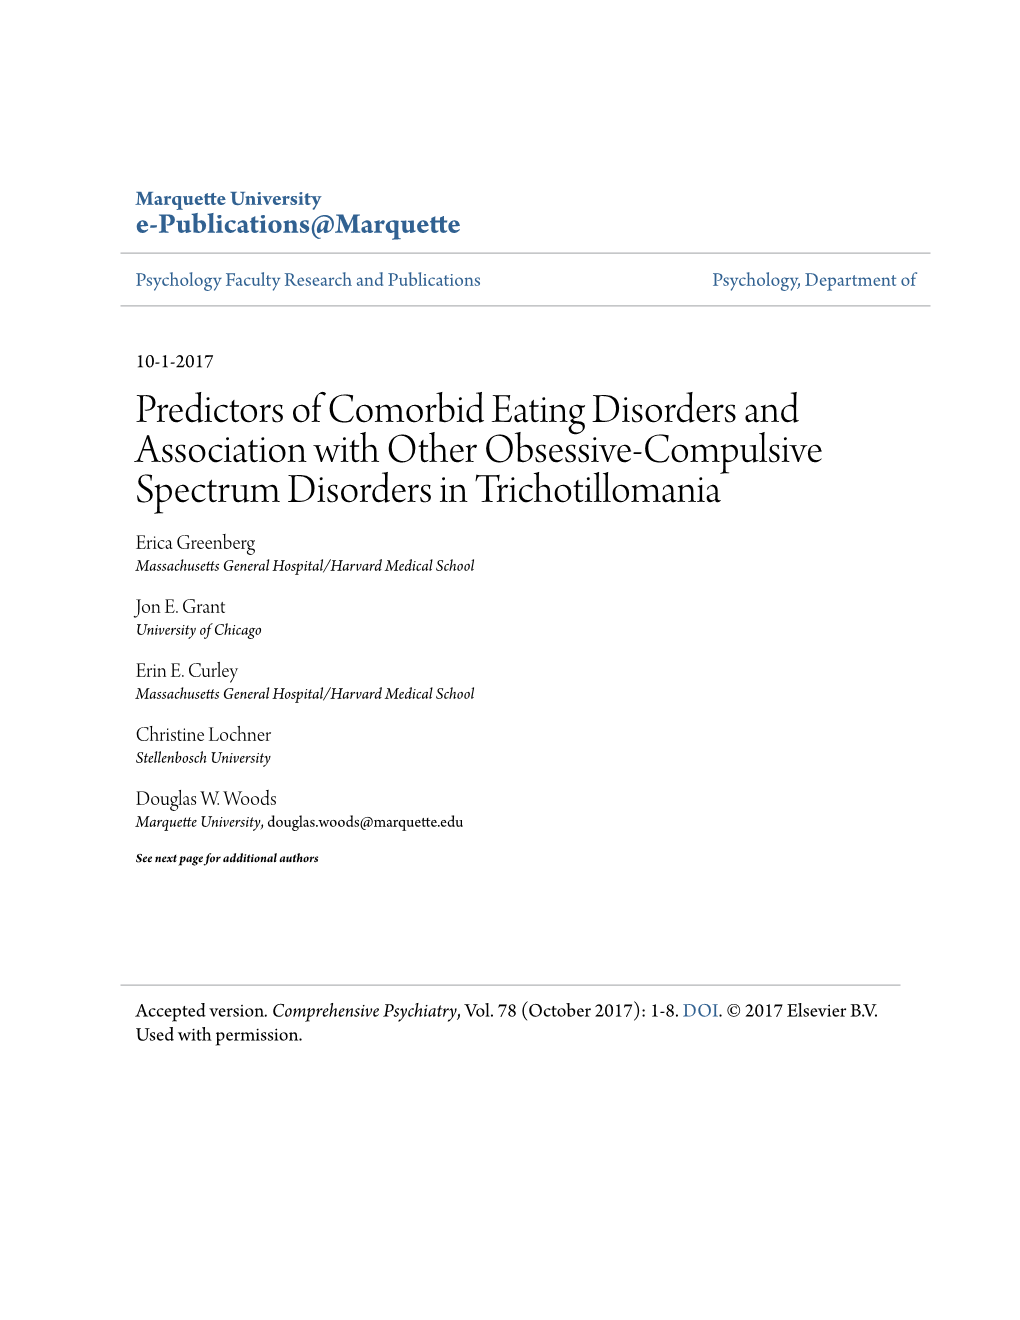 Predictors of Comorbid Eating Disorders and Association